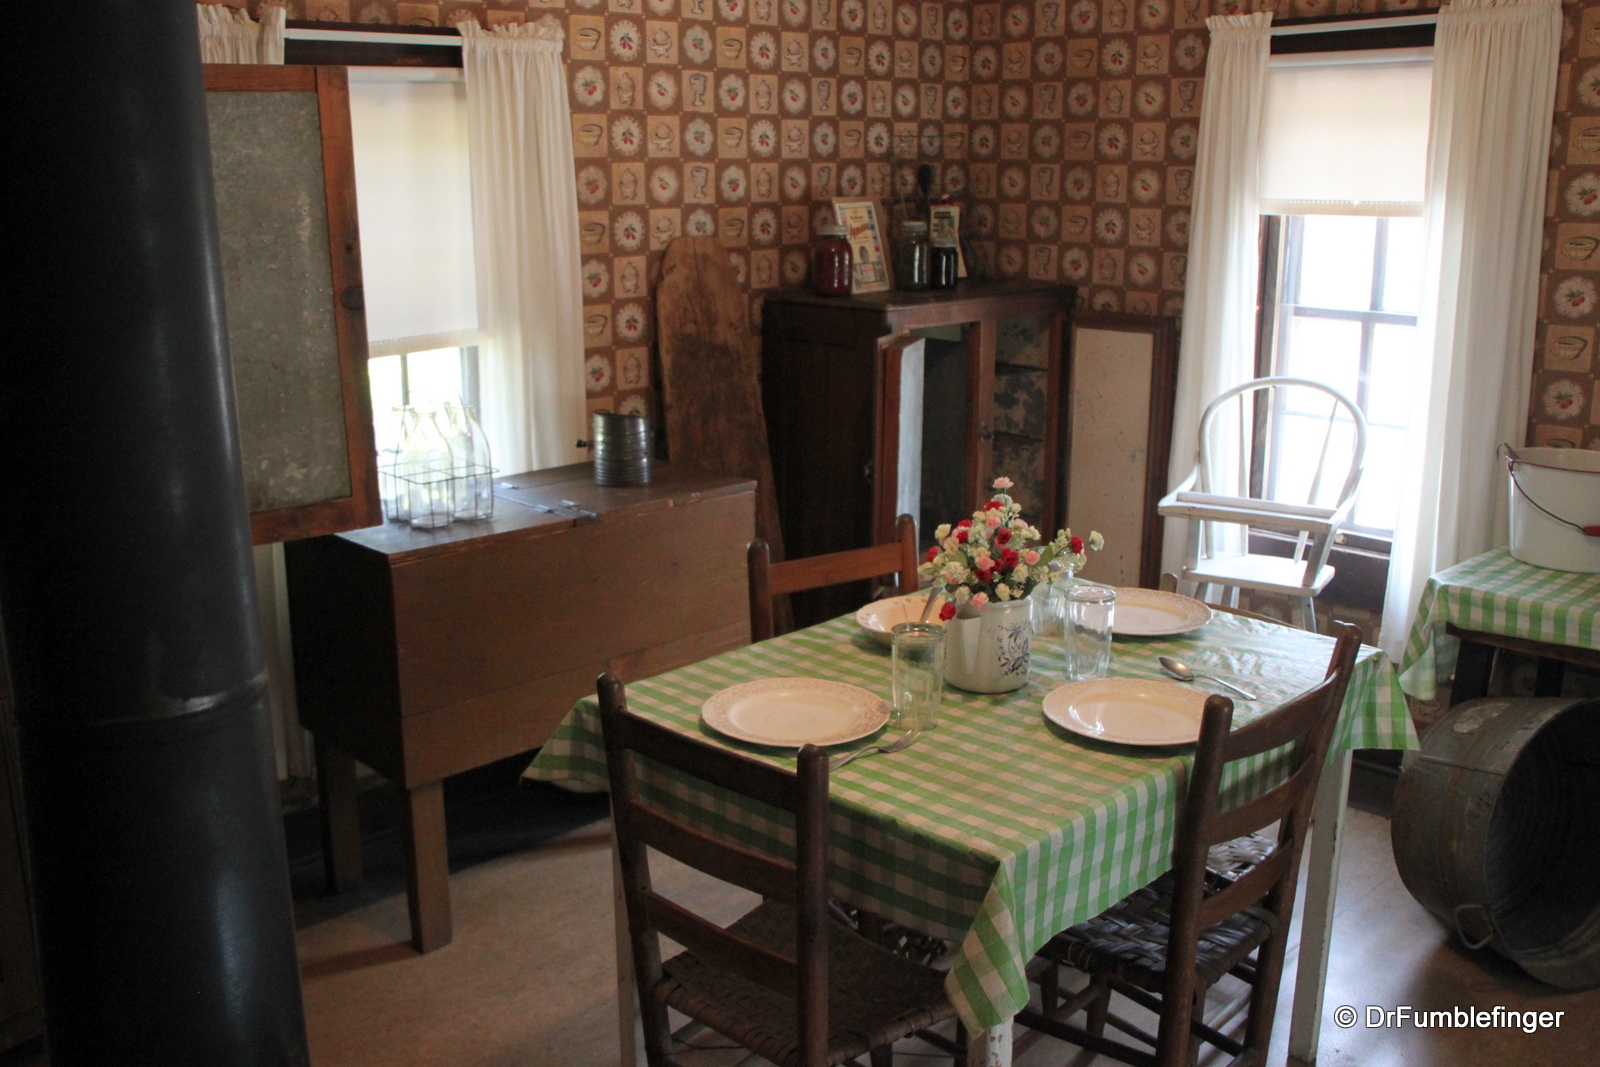 Elvis Presley Birthplace, Kitchen